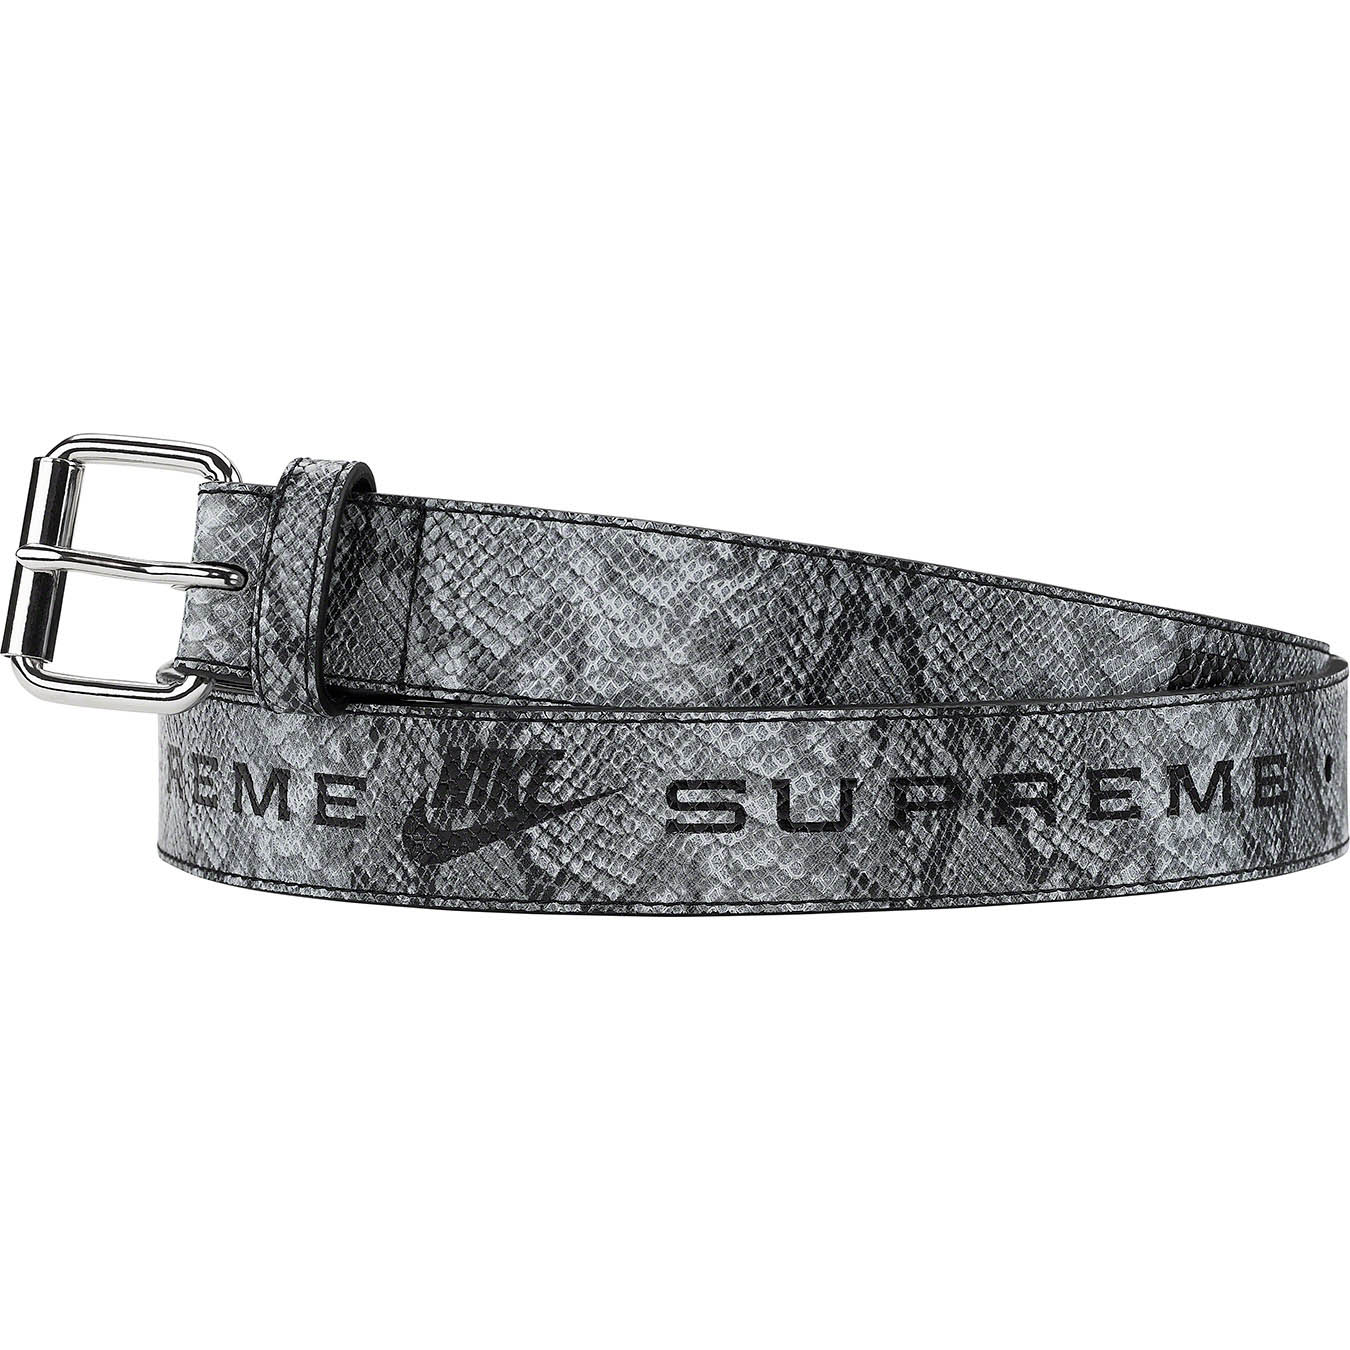 Supreme®/Nike® Snakeskin Belt